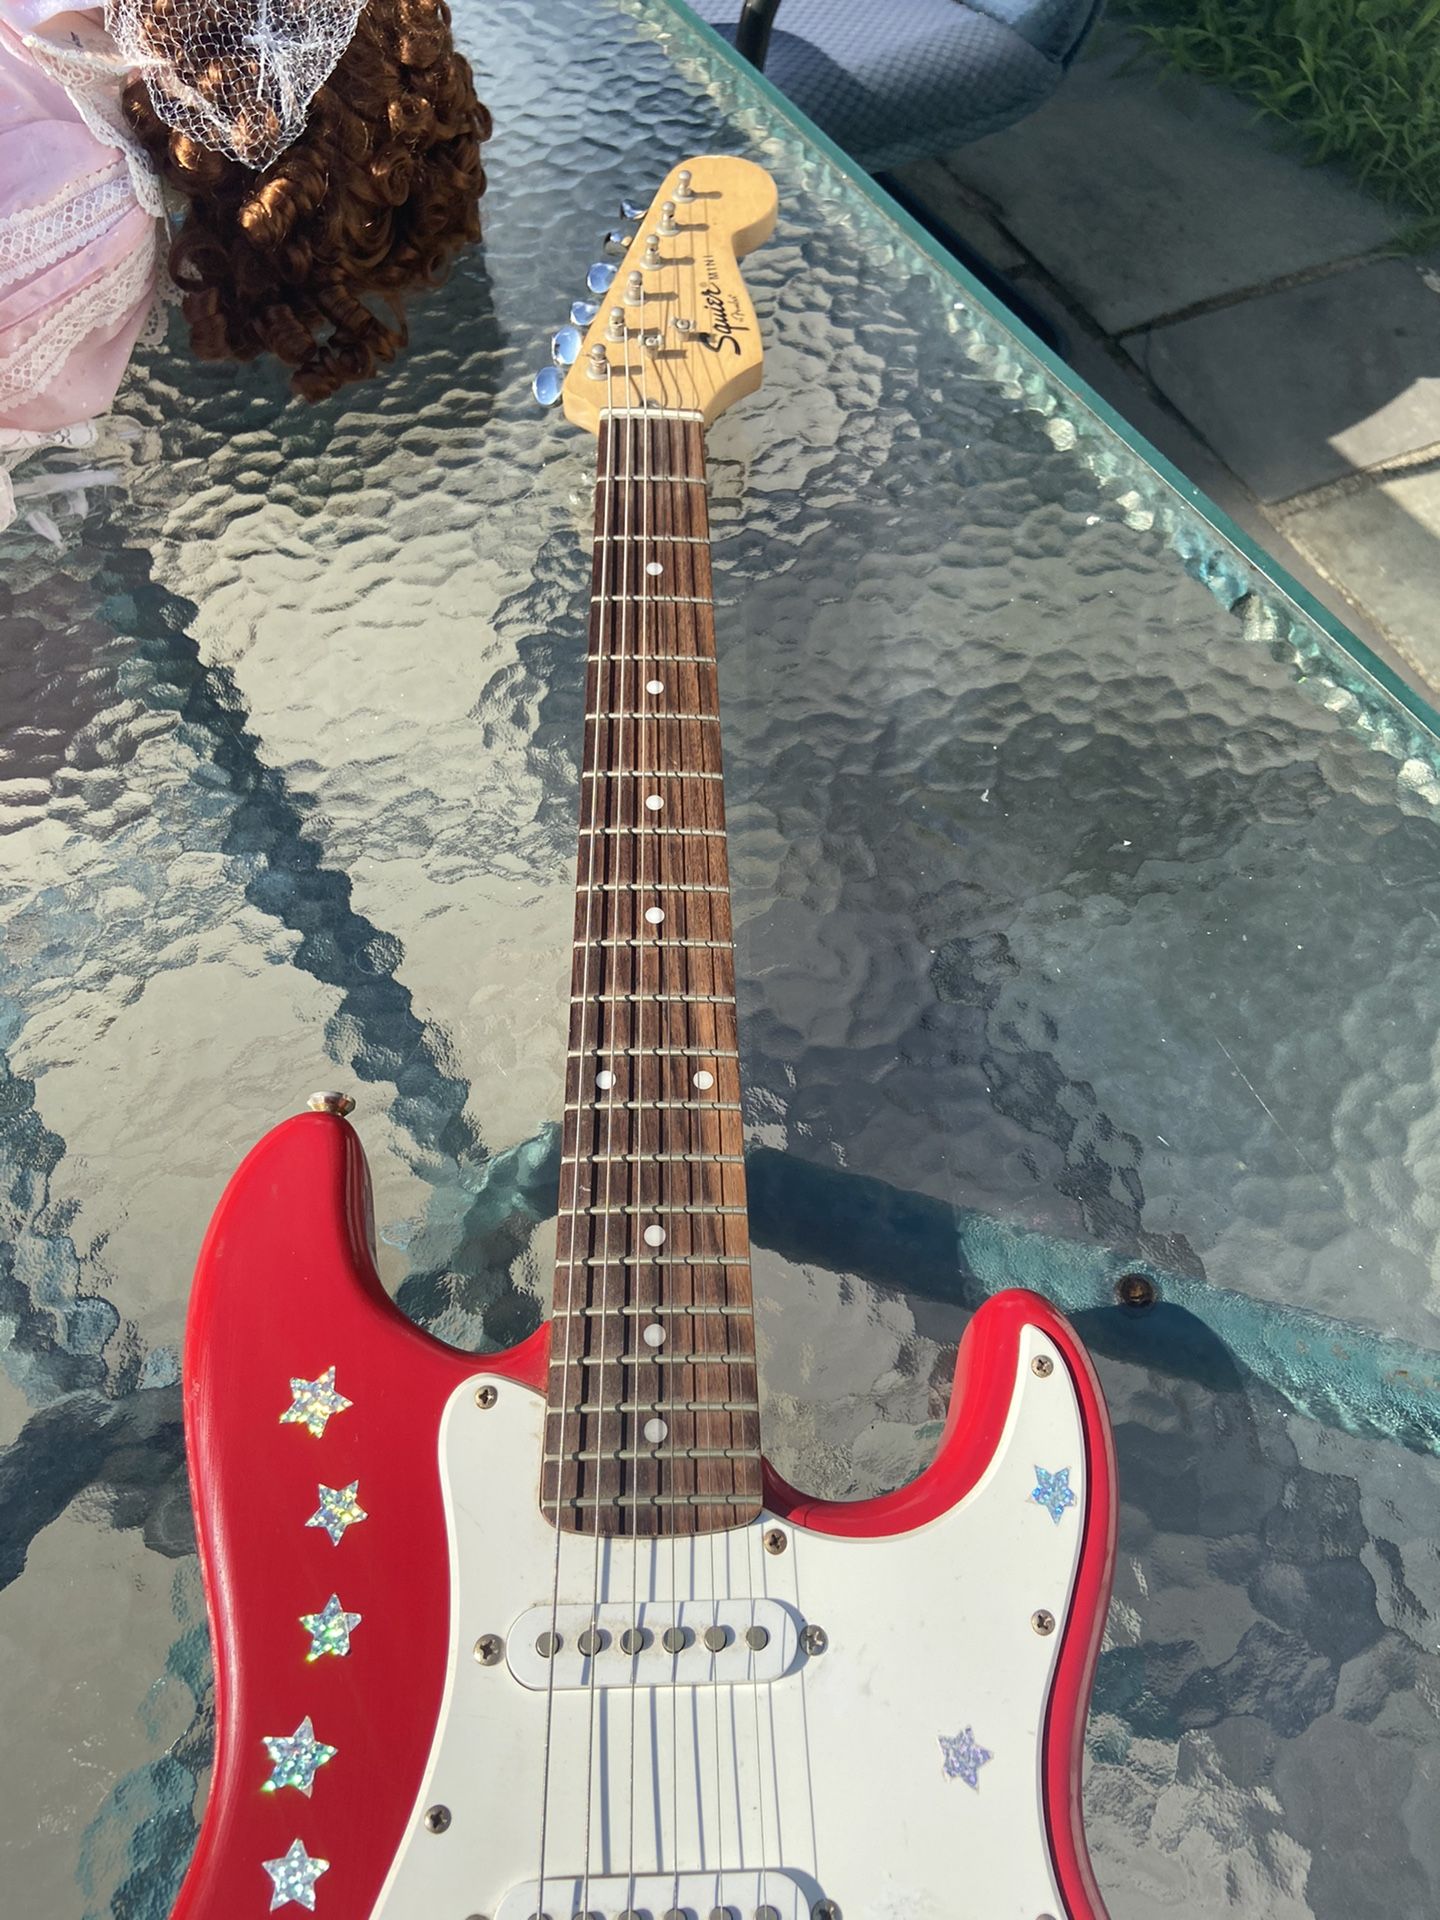 Fender mini guitar